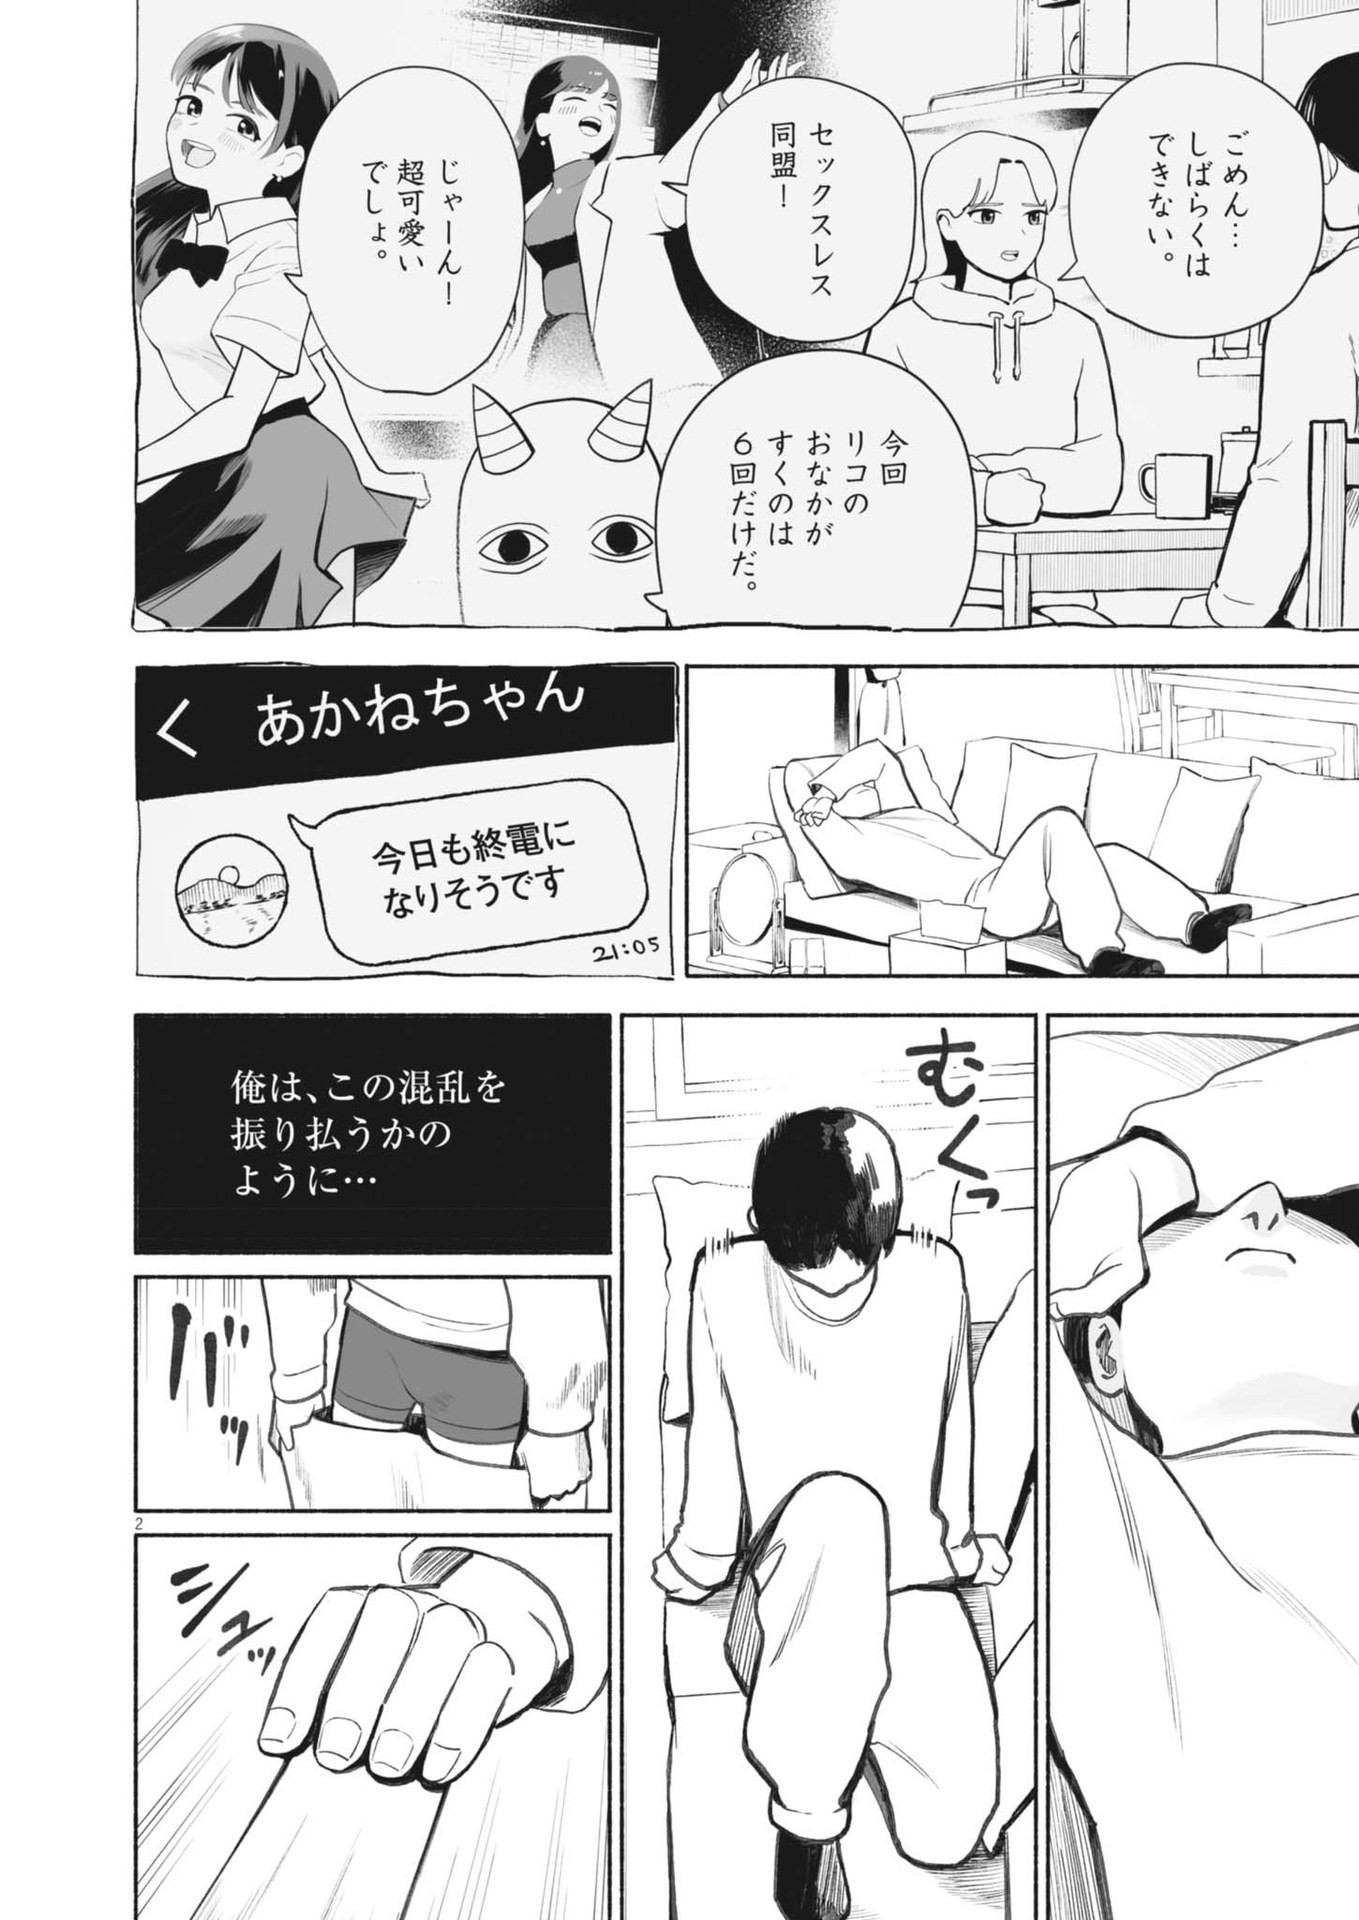 Gokuri - Chapter 4 - Page 2